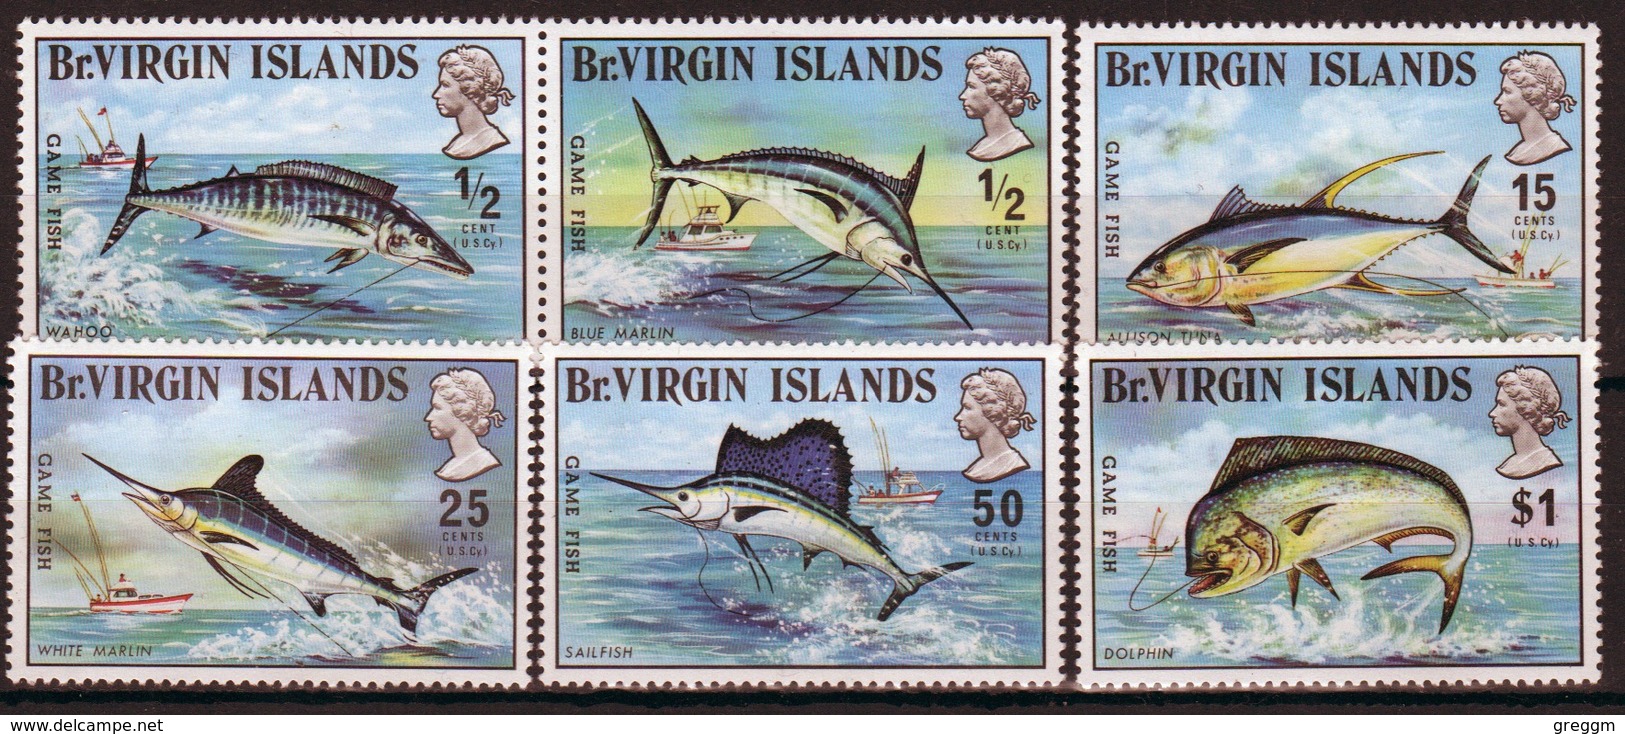 British Virgin Islands 1972 Queen Elizabeth Set Of Stamps Celebrating Game Fish. - British Virgin Islands